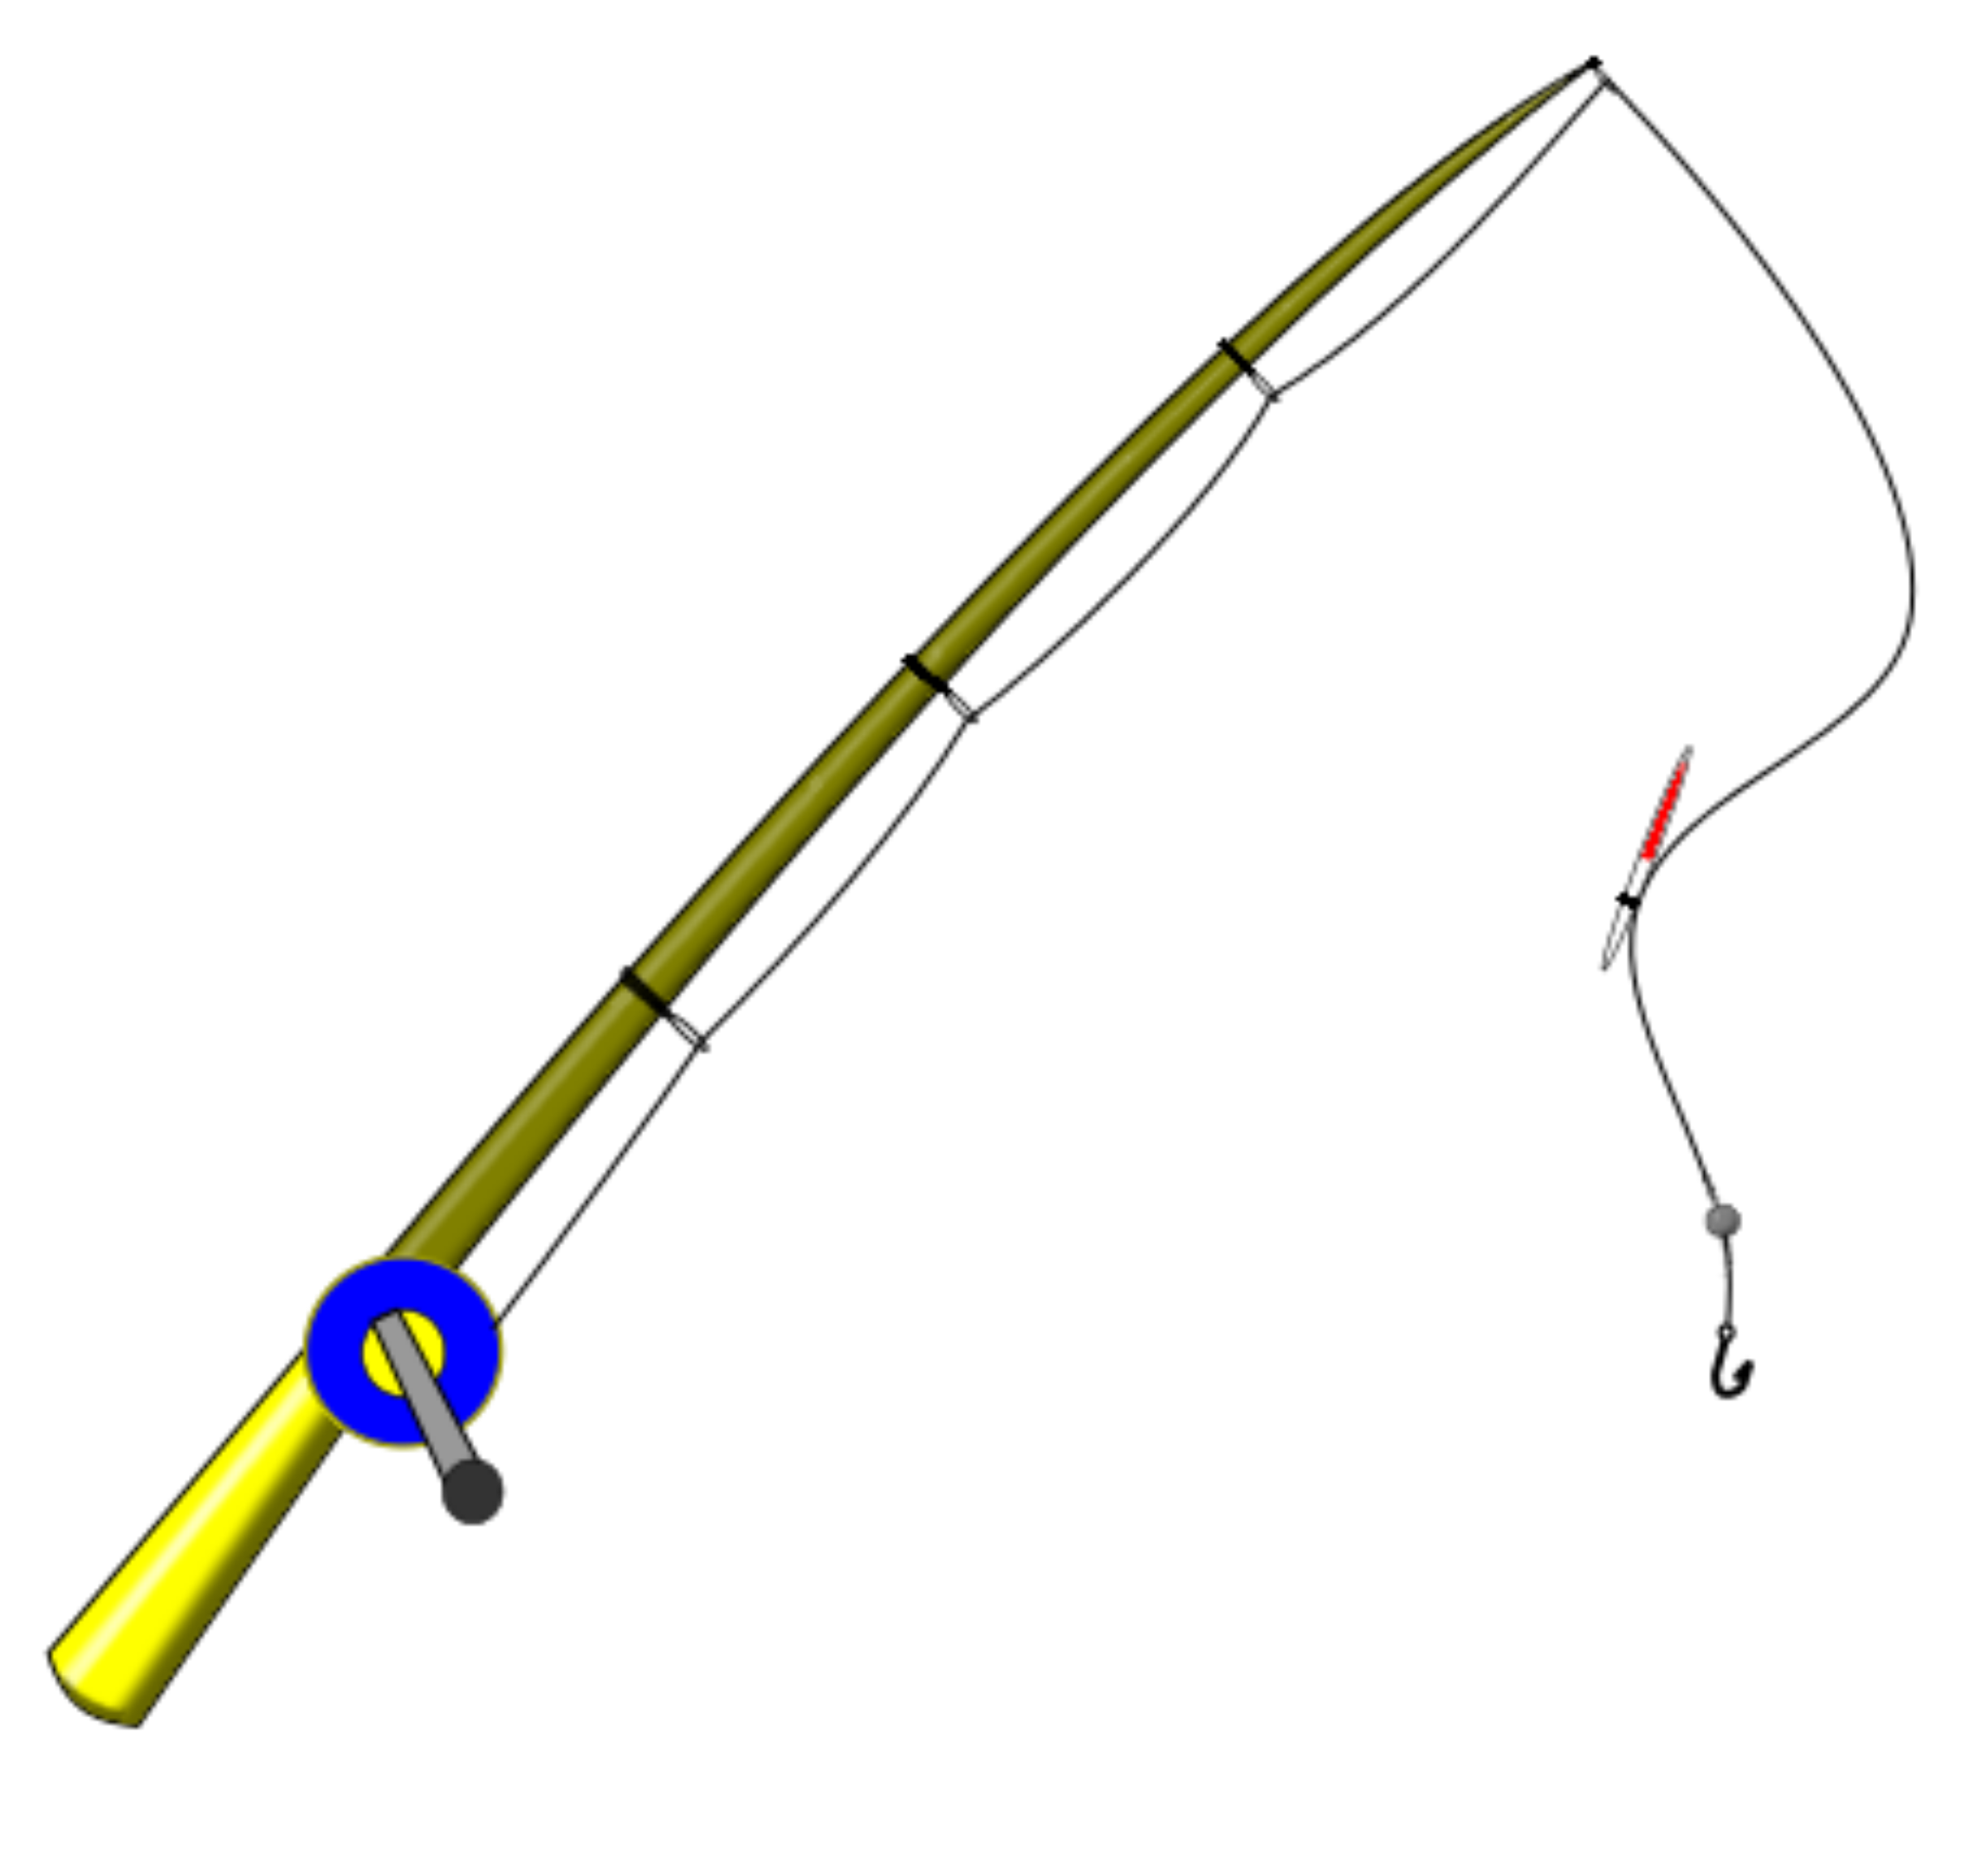 Fishing pole clip art fishing rod - Clipartix